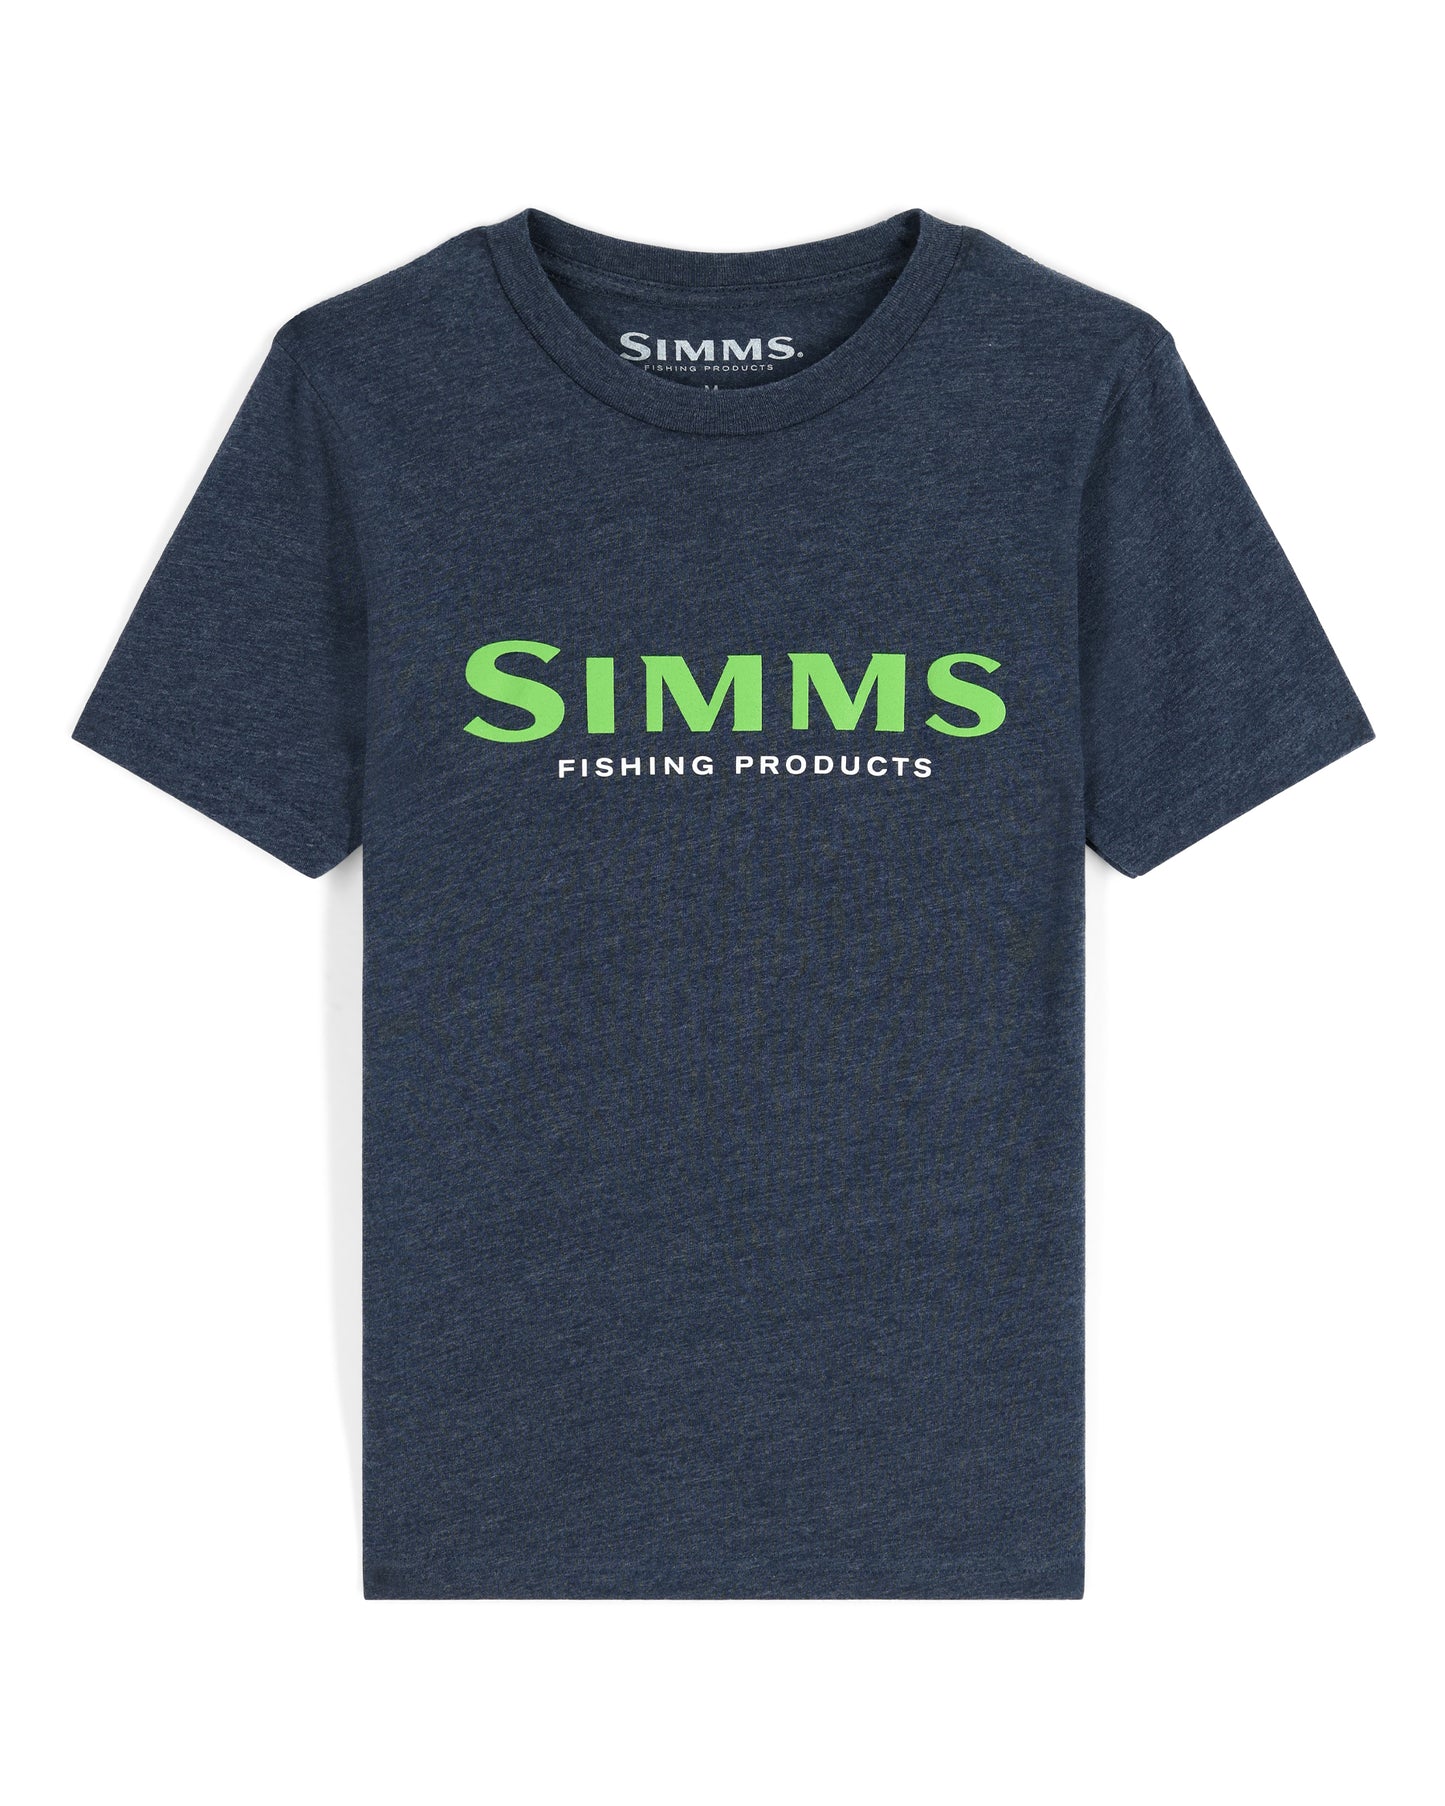    13515-944-simms-logo-t-shirt-Mannequin-s23-front